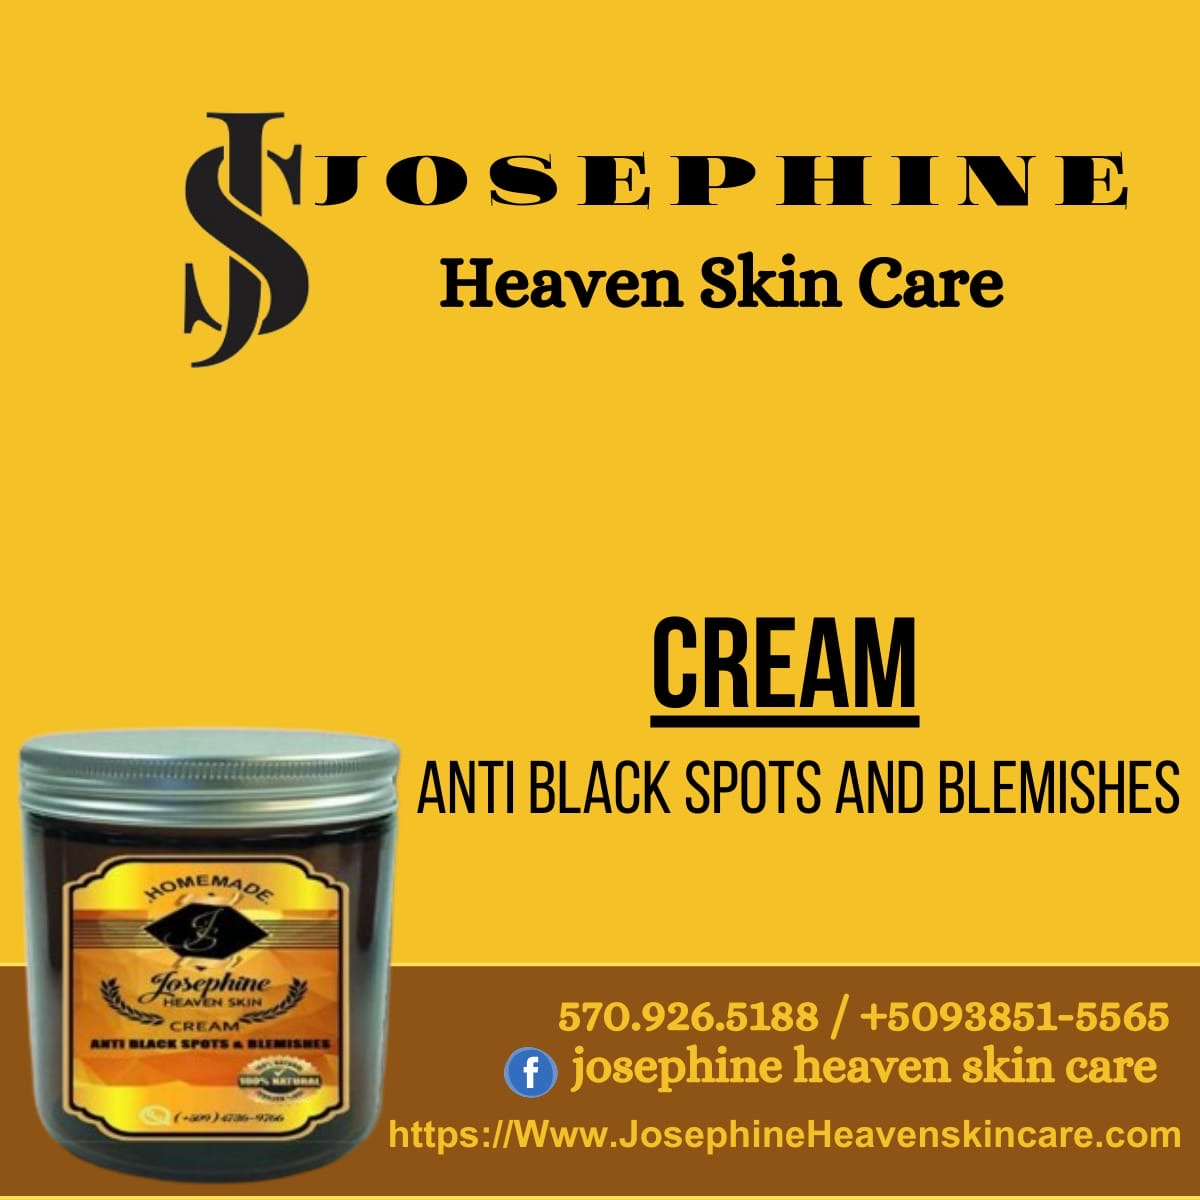 Josephine Heaven Anti-Dark Spot Anti-Blemishes Cream